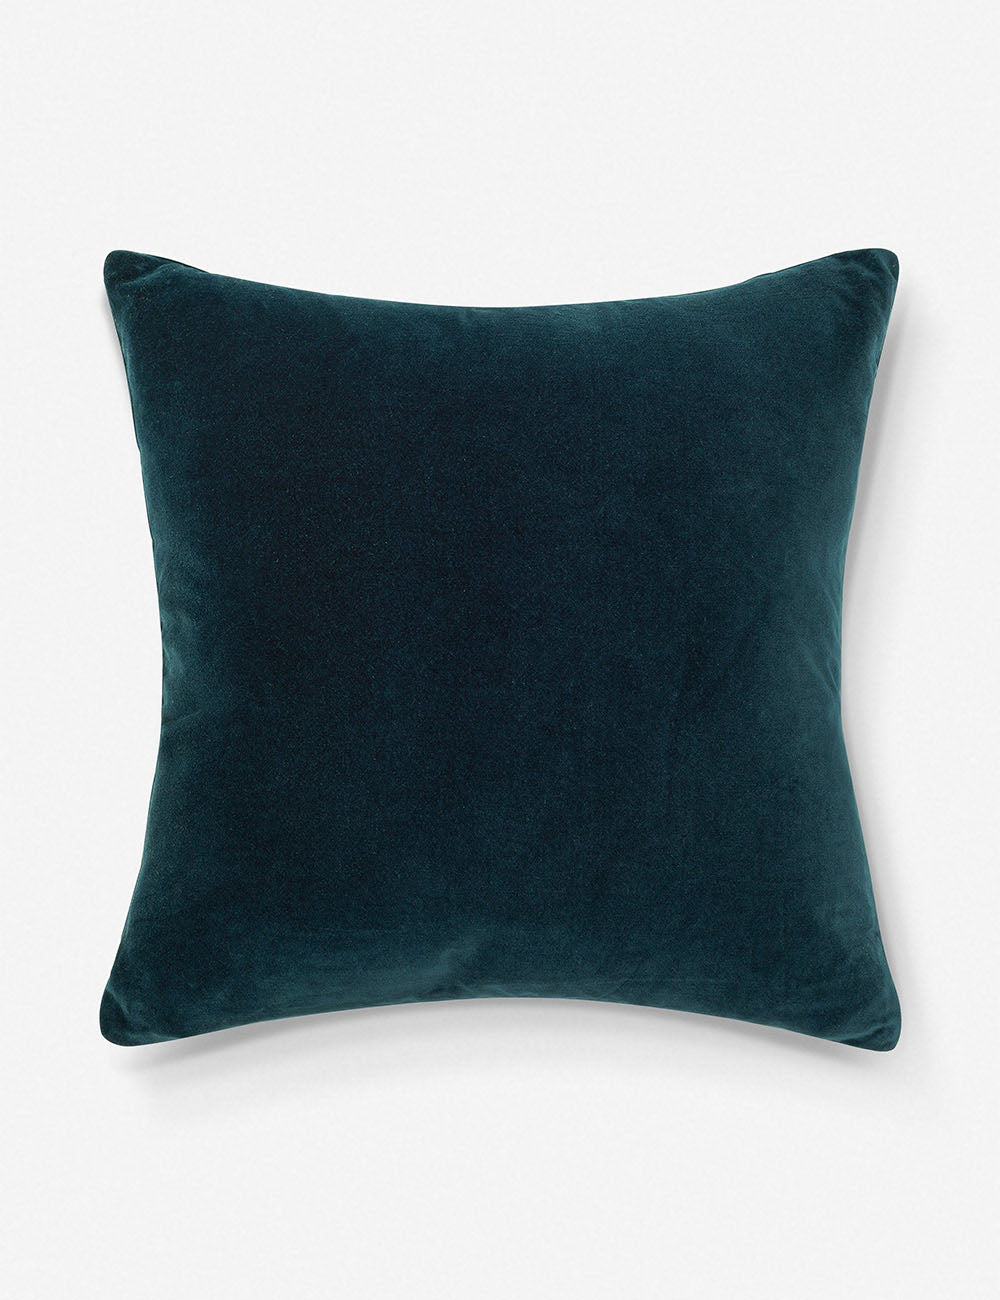 Shop Charlotte Velvet Pillow | Navy | Quantity: 1 from Lulu & Georgia on Openhaus